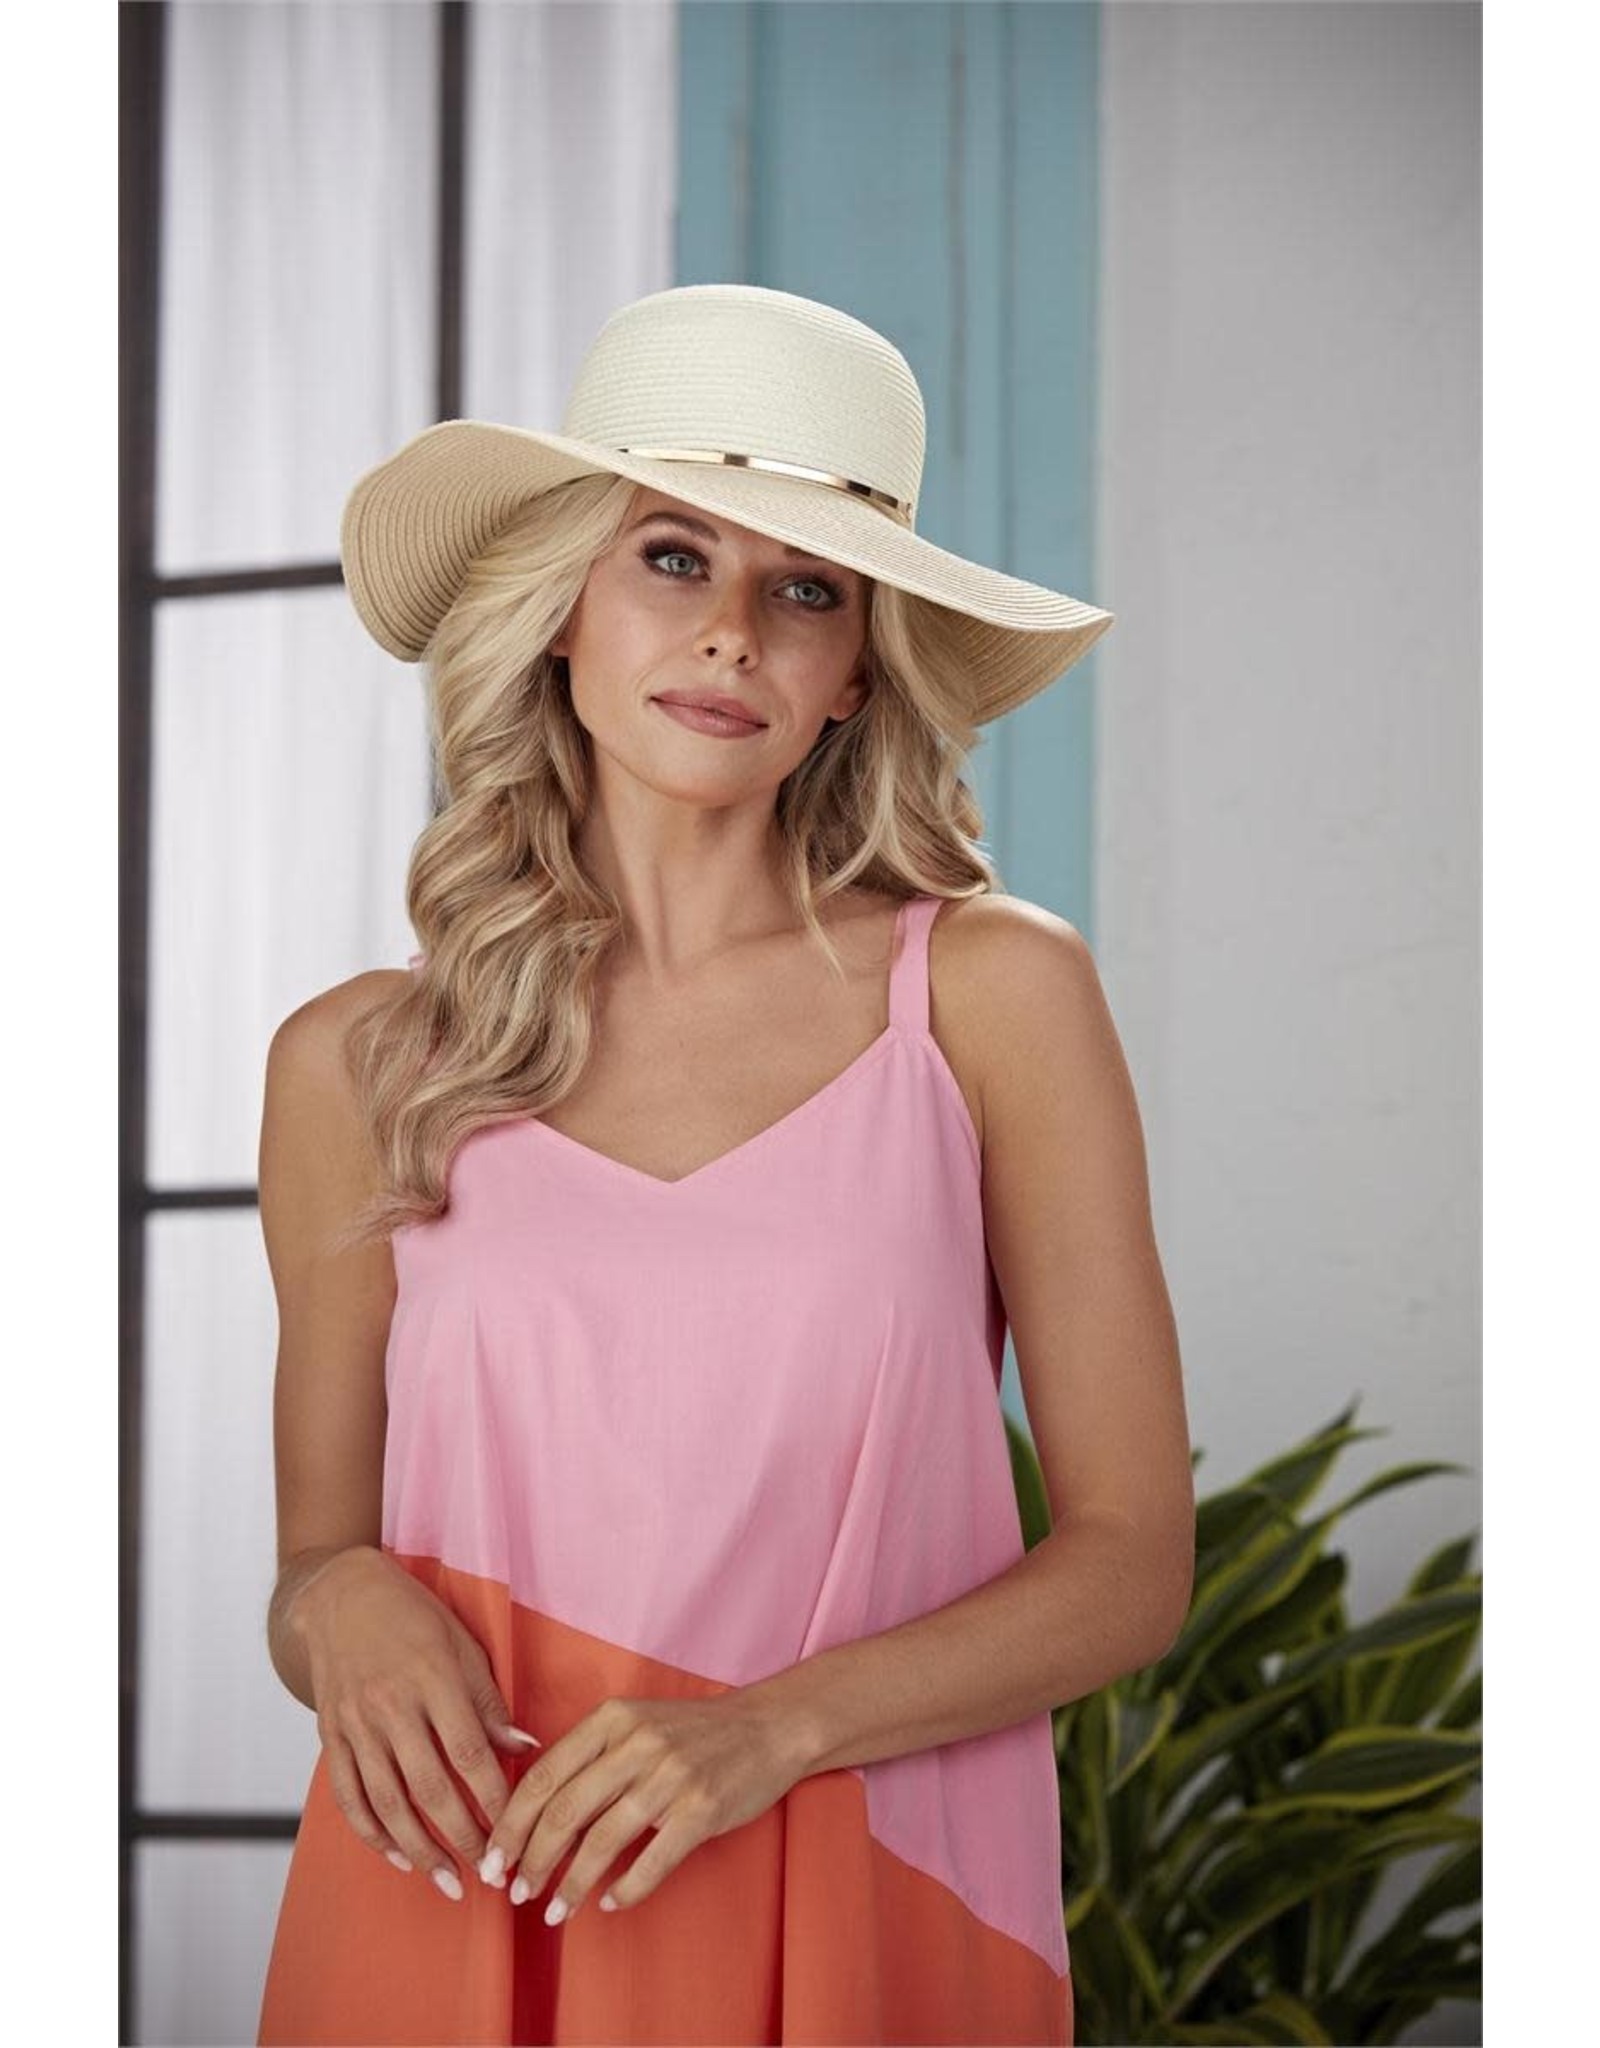 Mud Pie Women's Hats - Color-Block Sun Hat In Blush